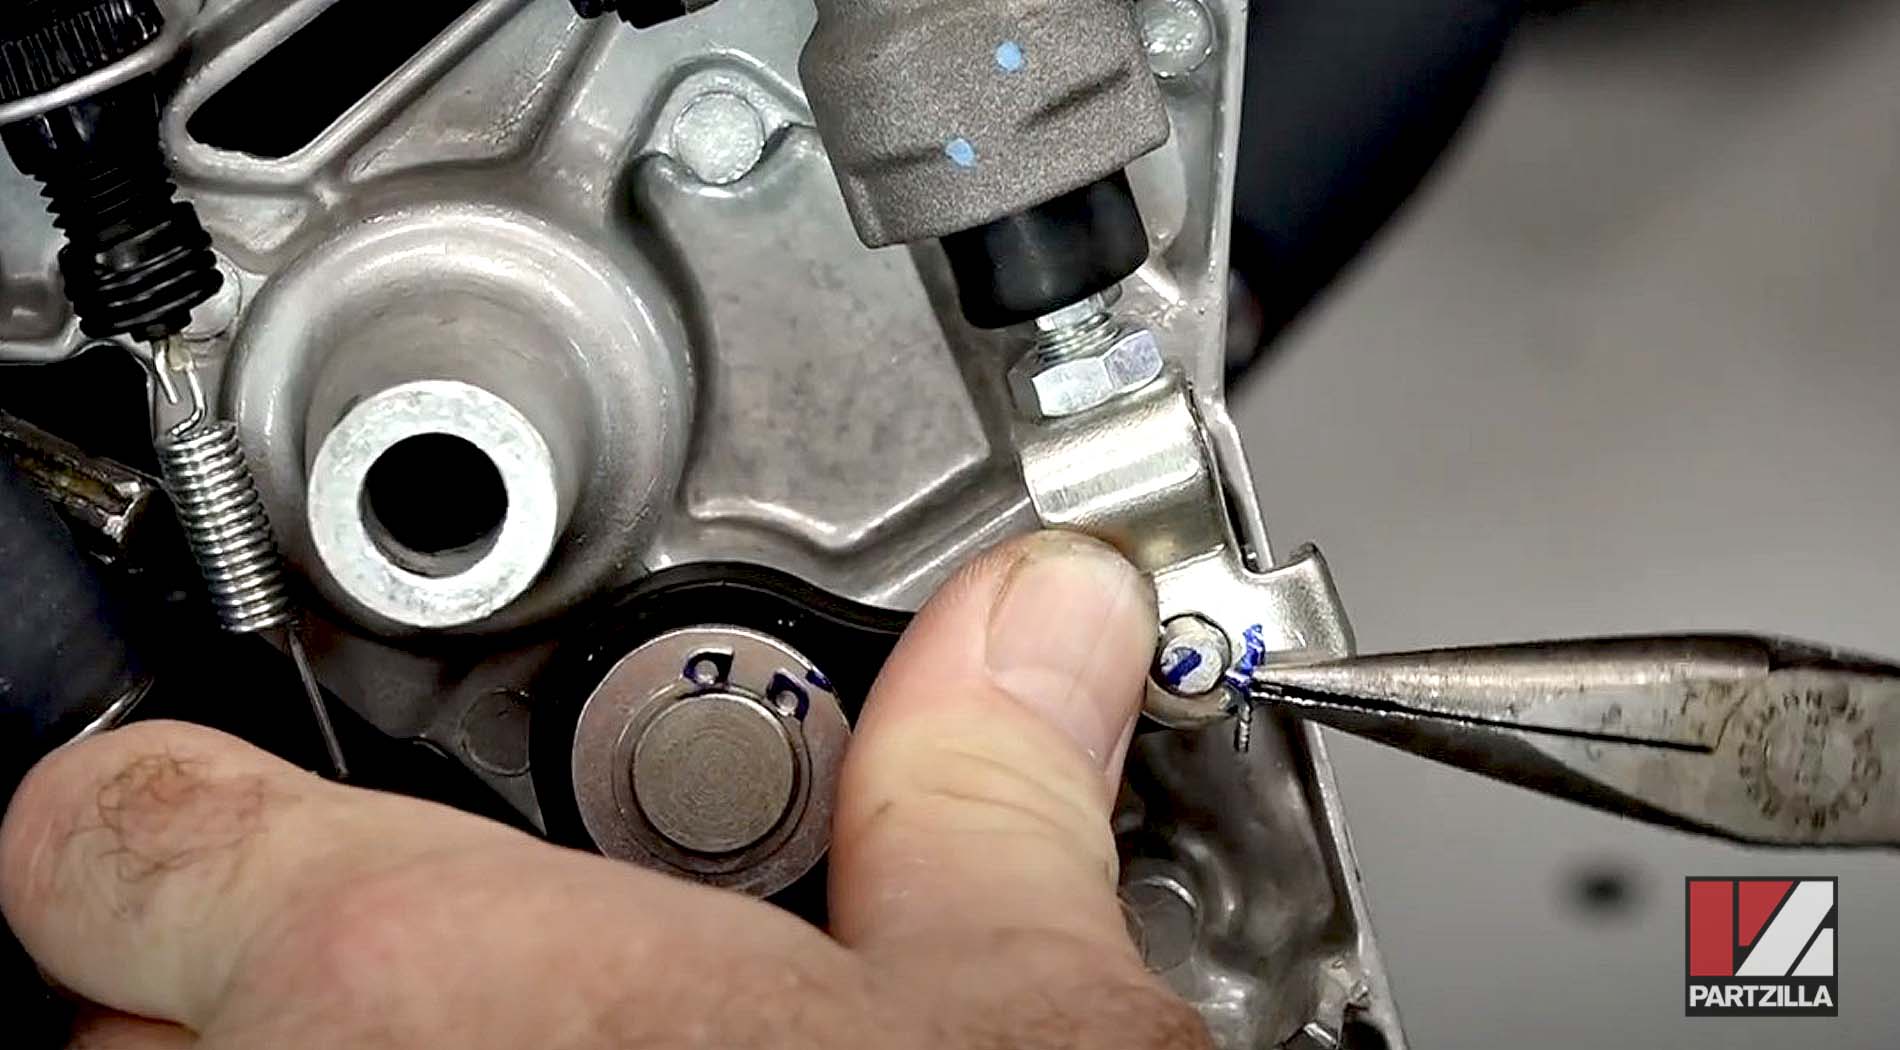 Honda Grom 125 rearset upgrade master cylinder removal